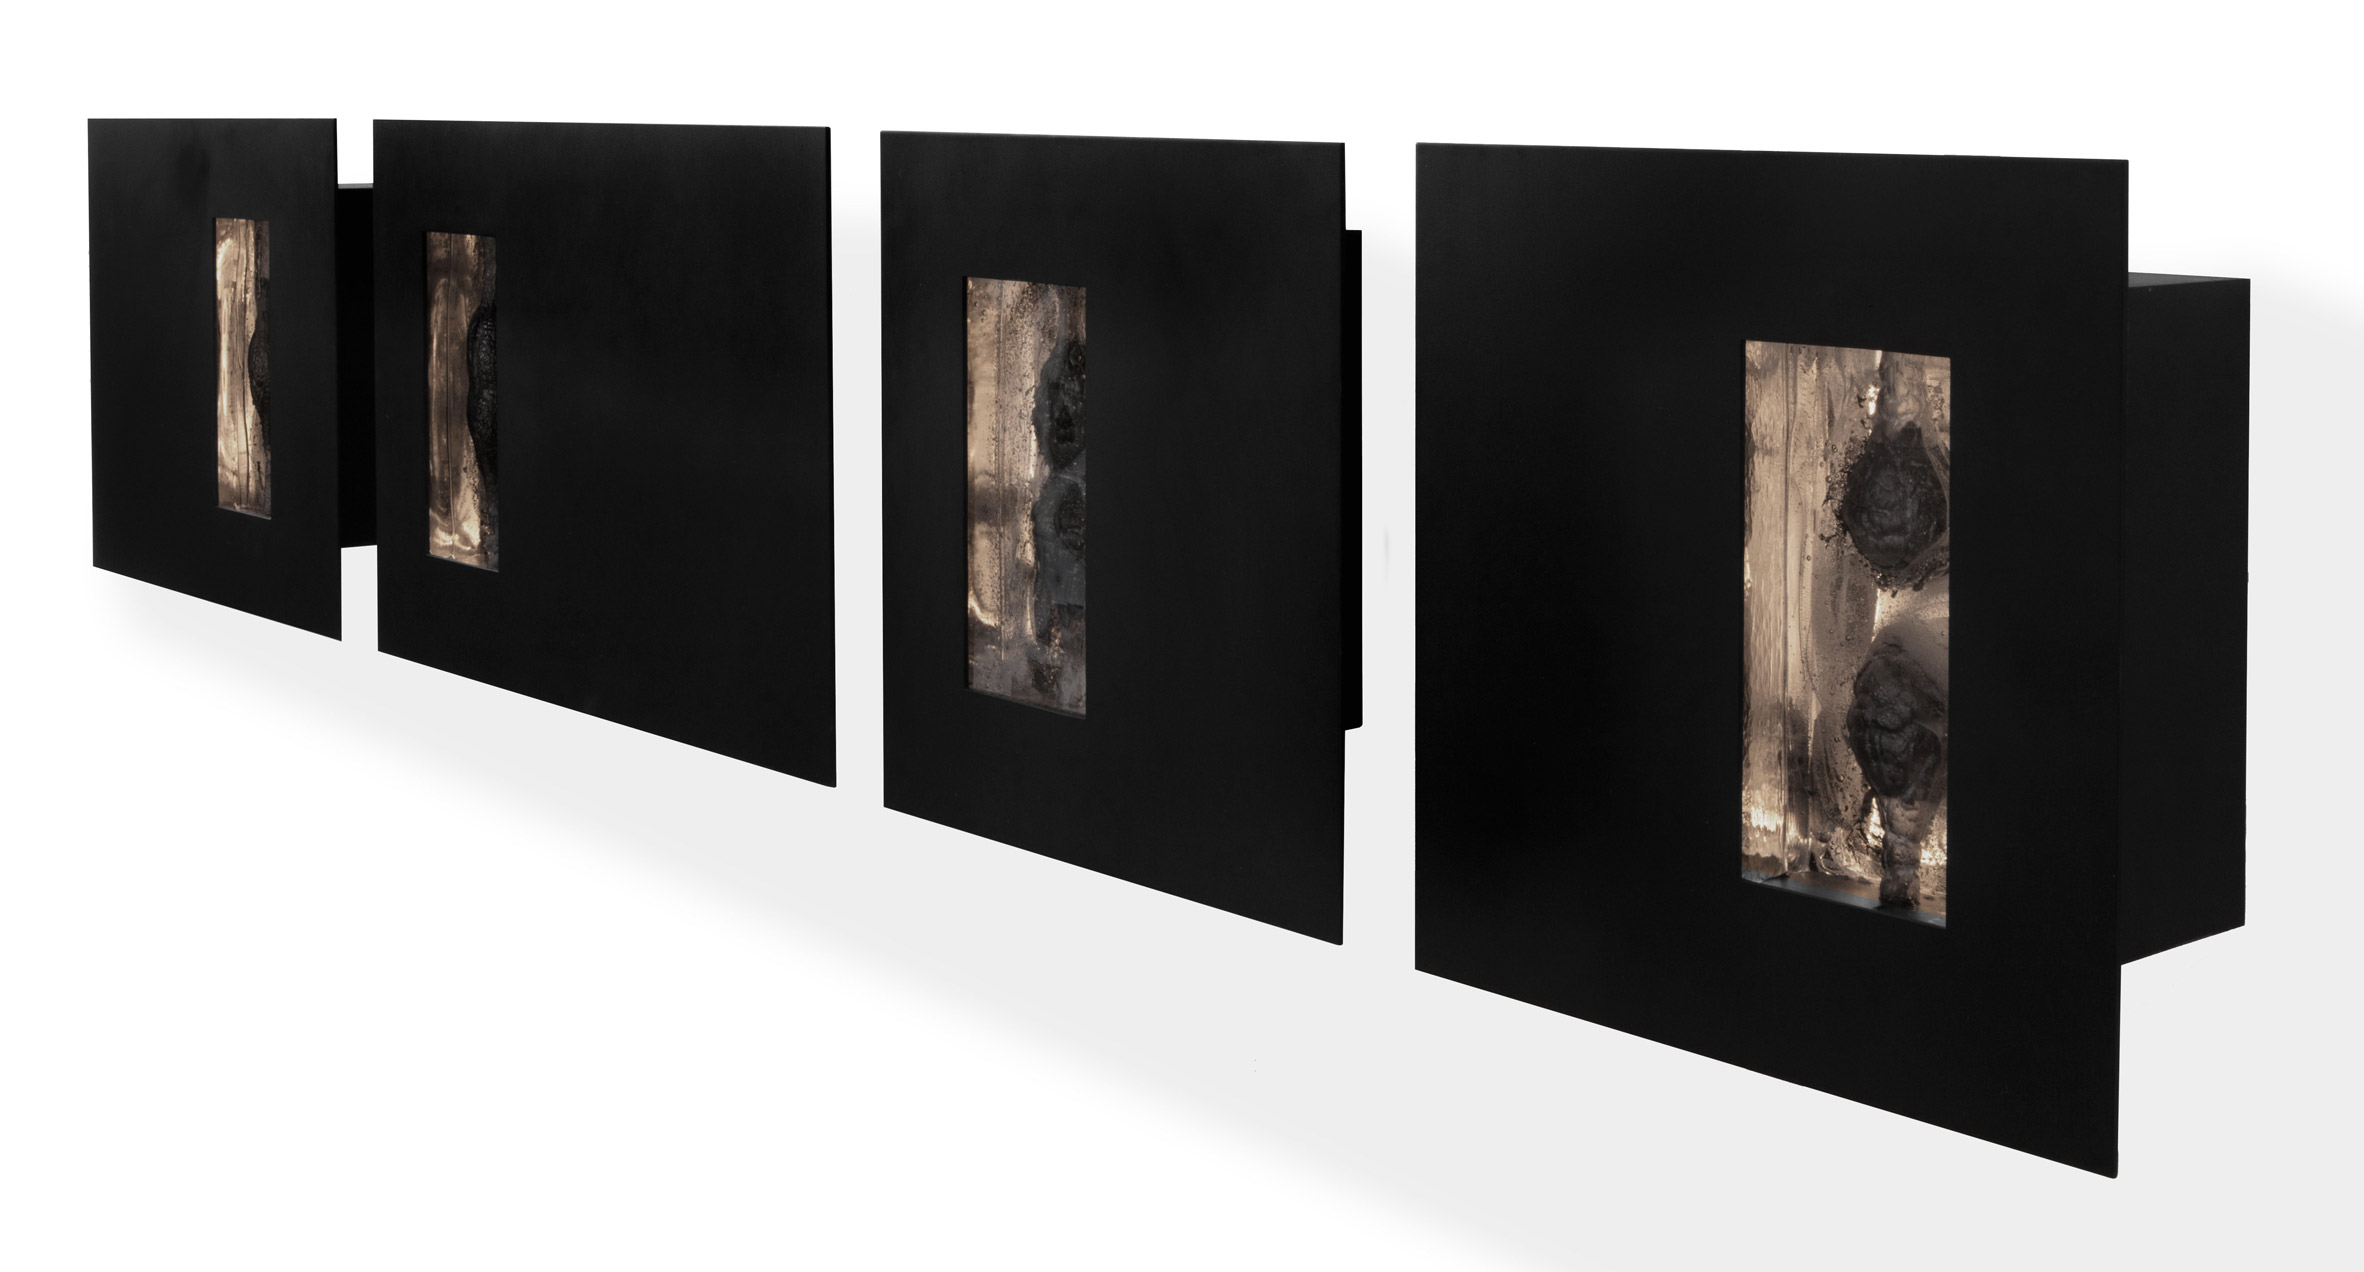 Esrawe Studio blackens glass with burned wood for sculptural lighting set